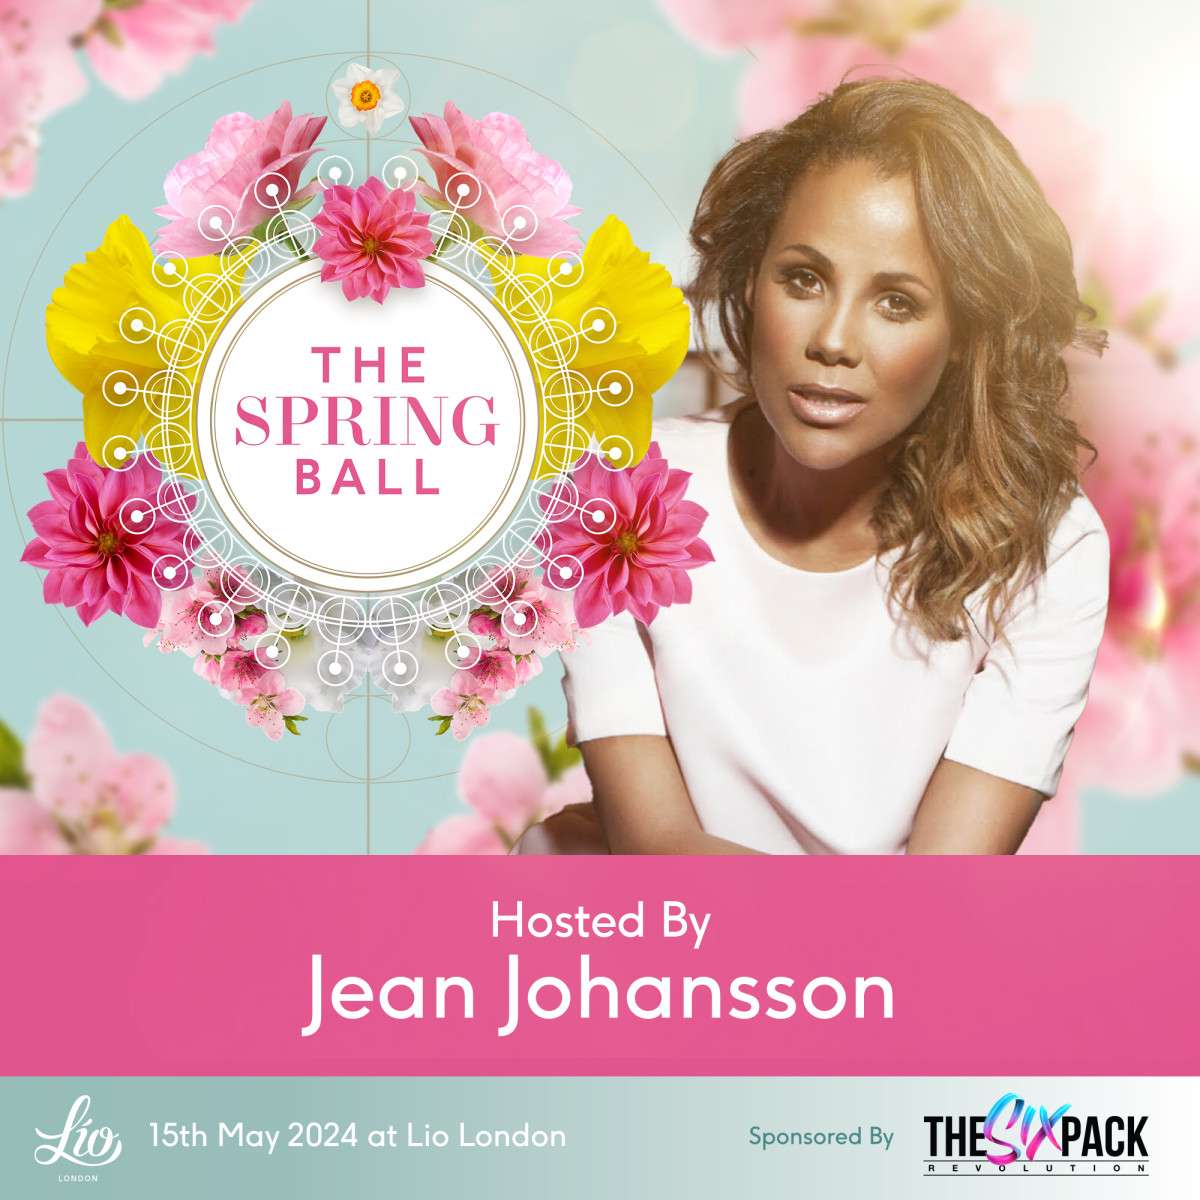 Jean Johansson announced as host of The Spring Ball.